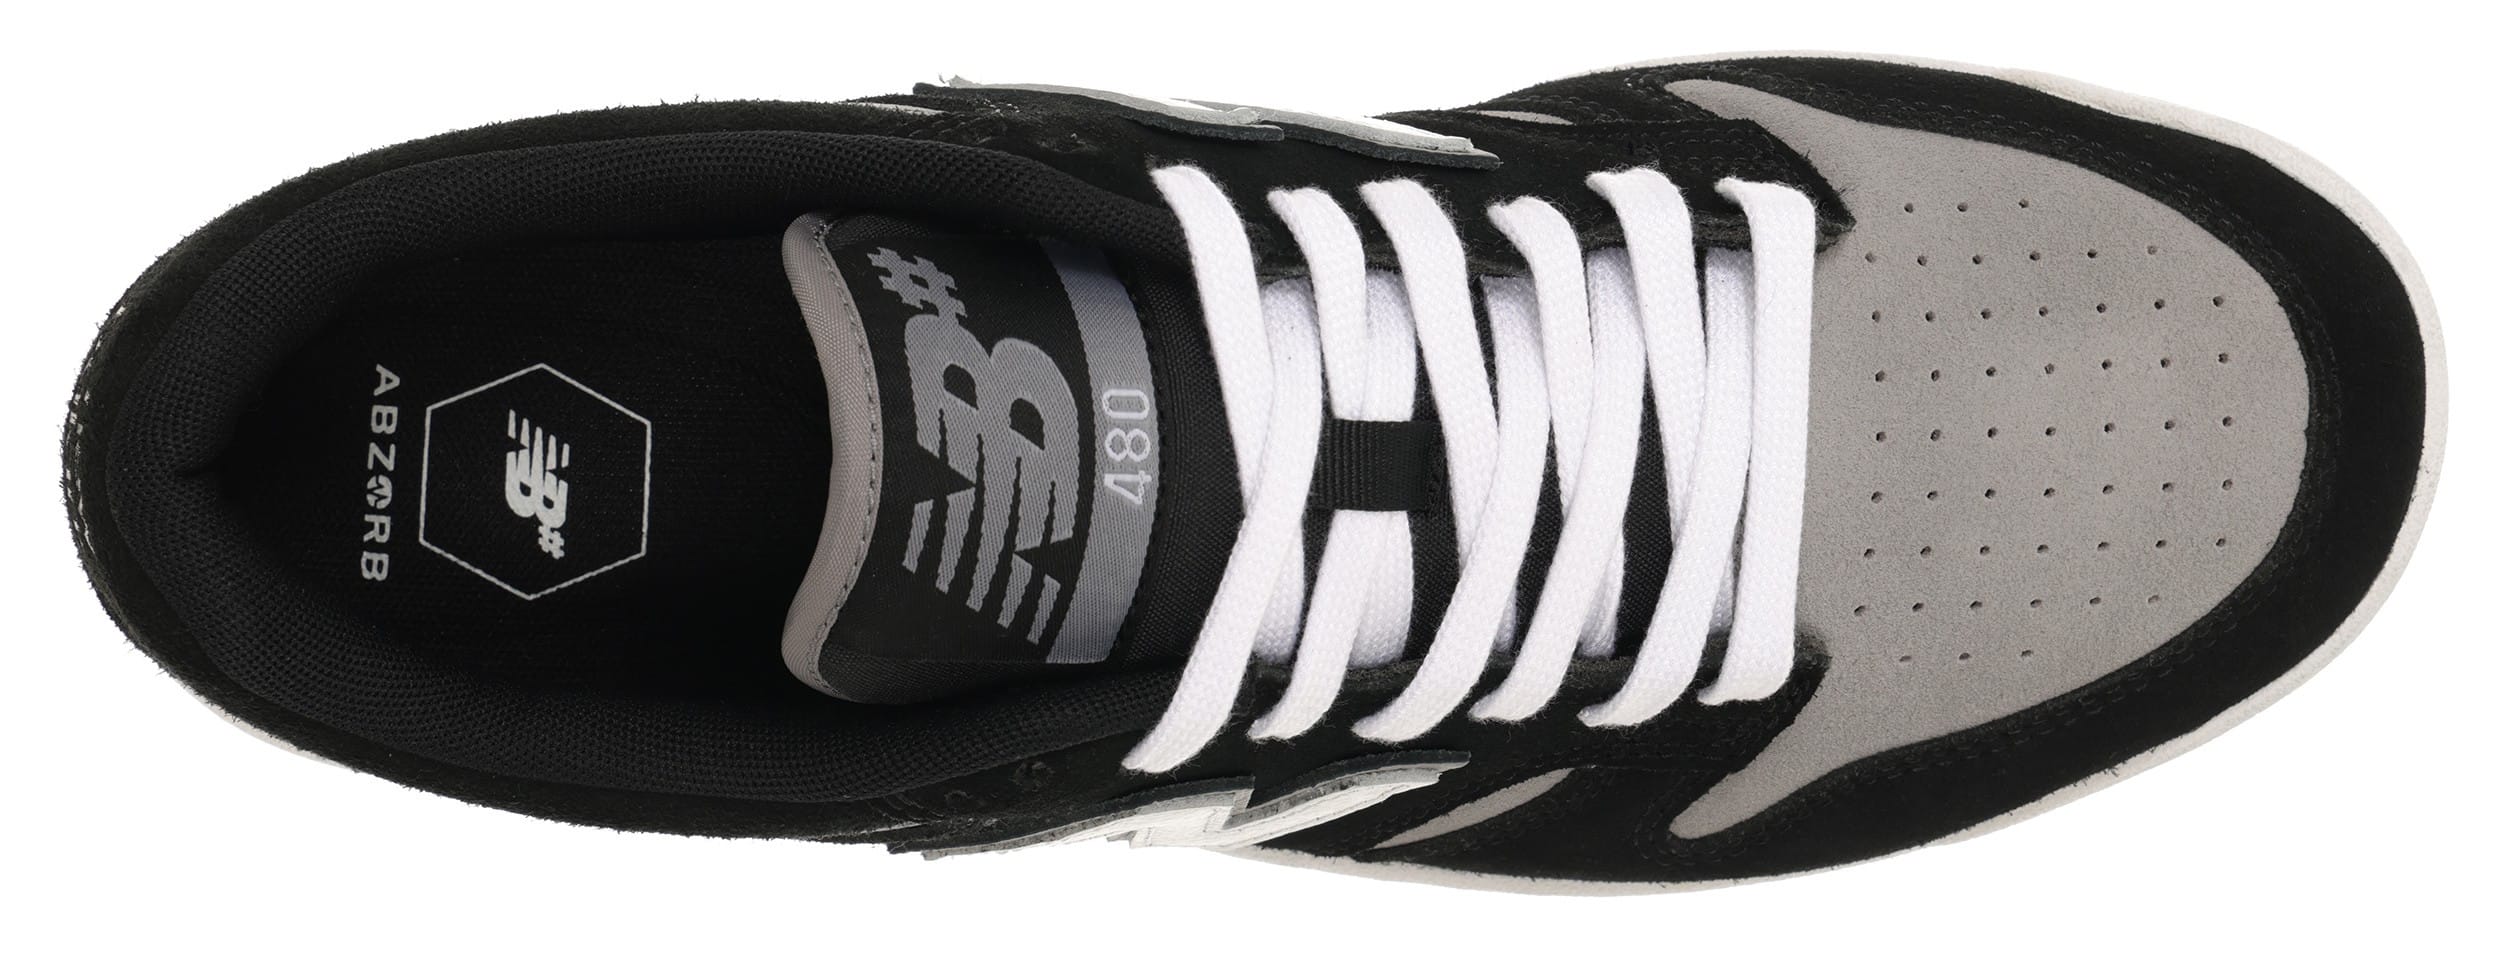 New Balance Numeric 480 Skate Shoes - black/grey | Tactics